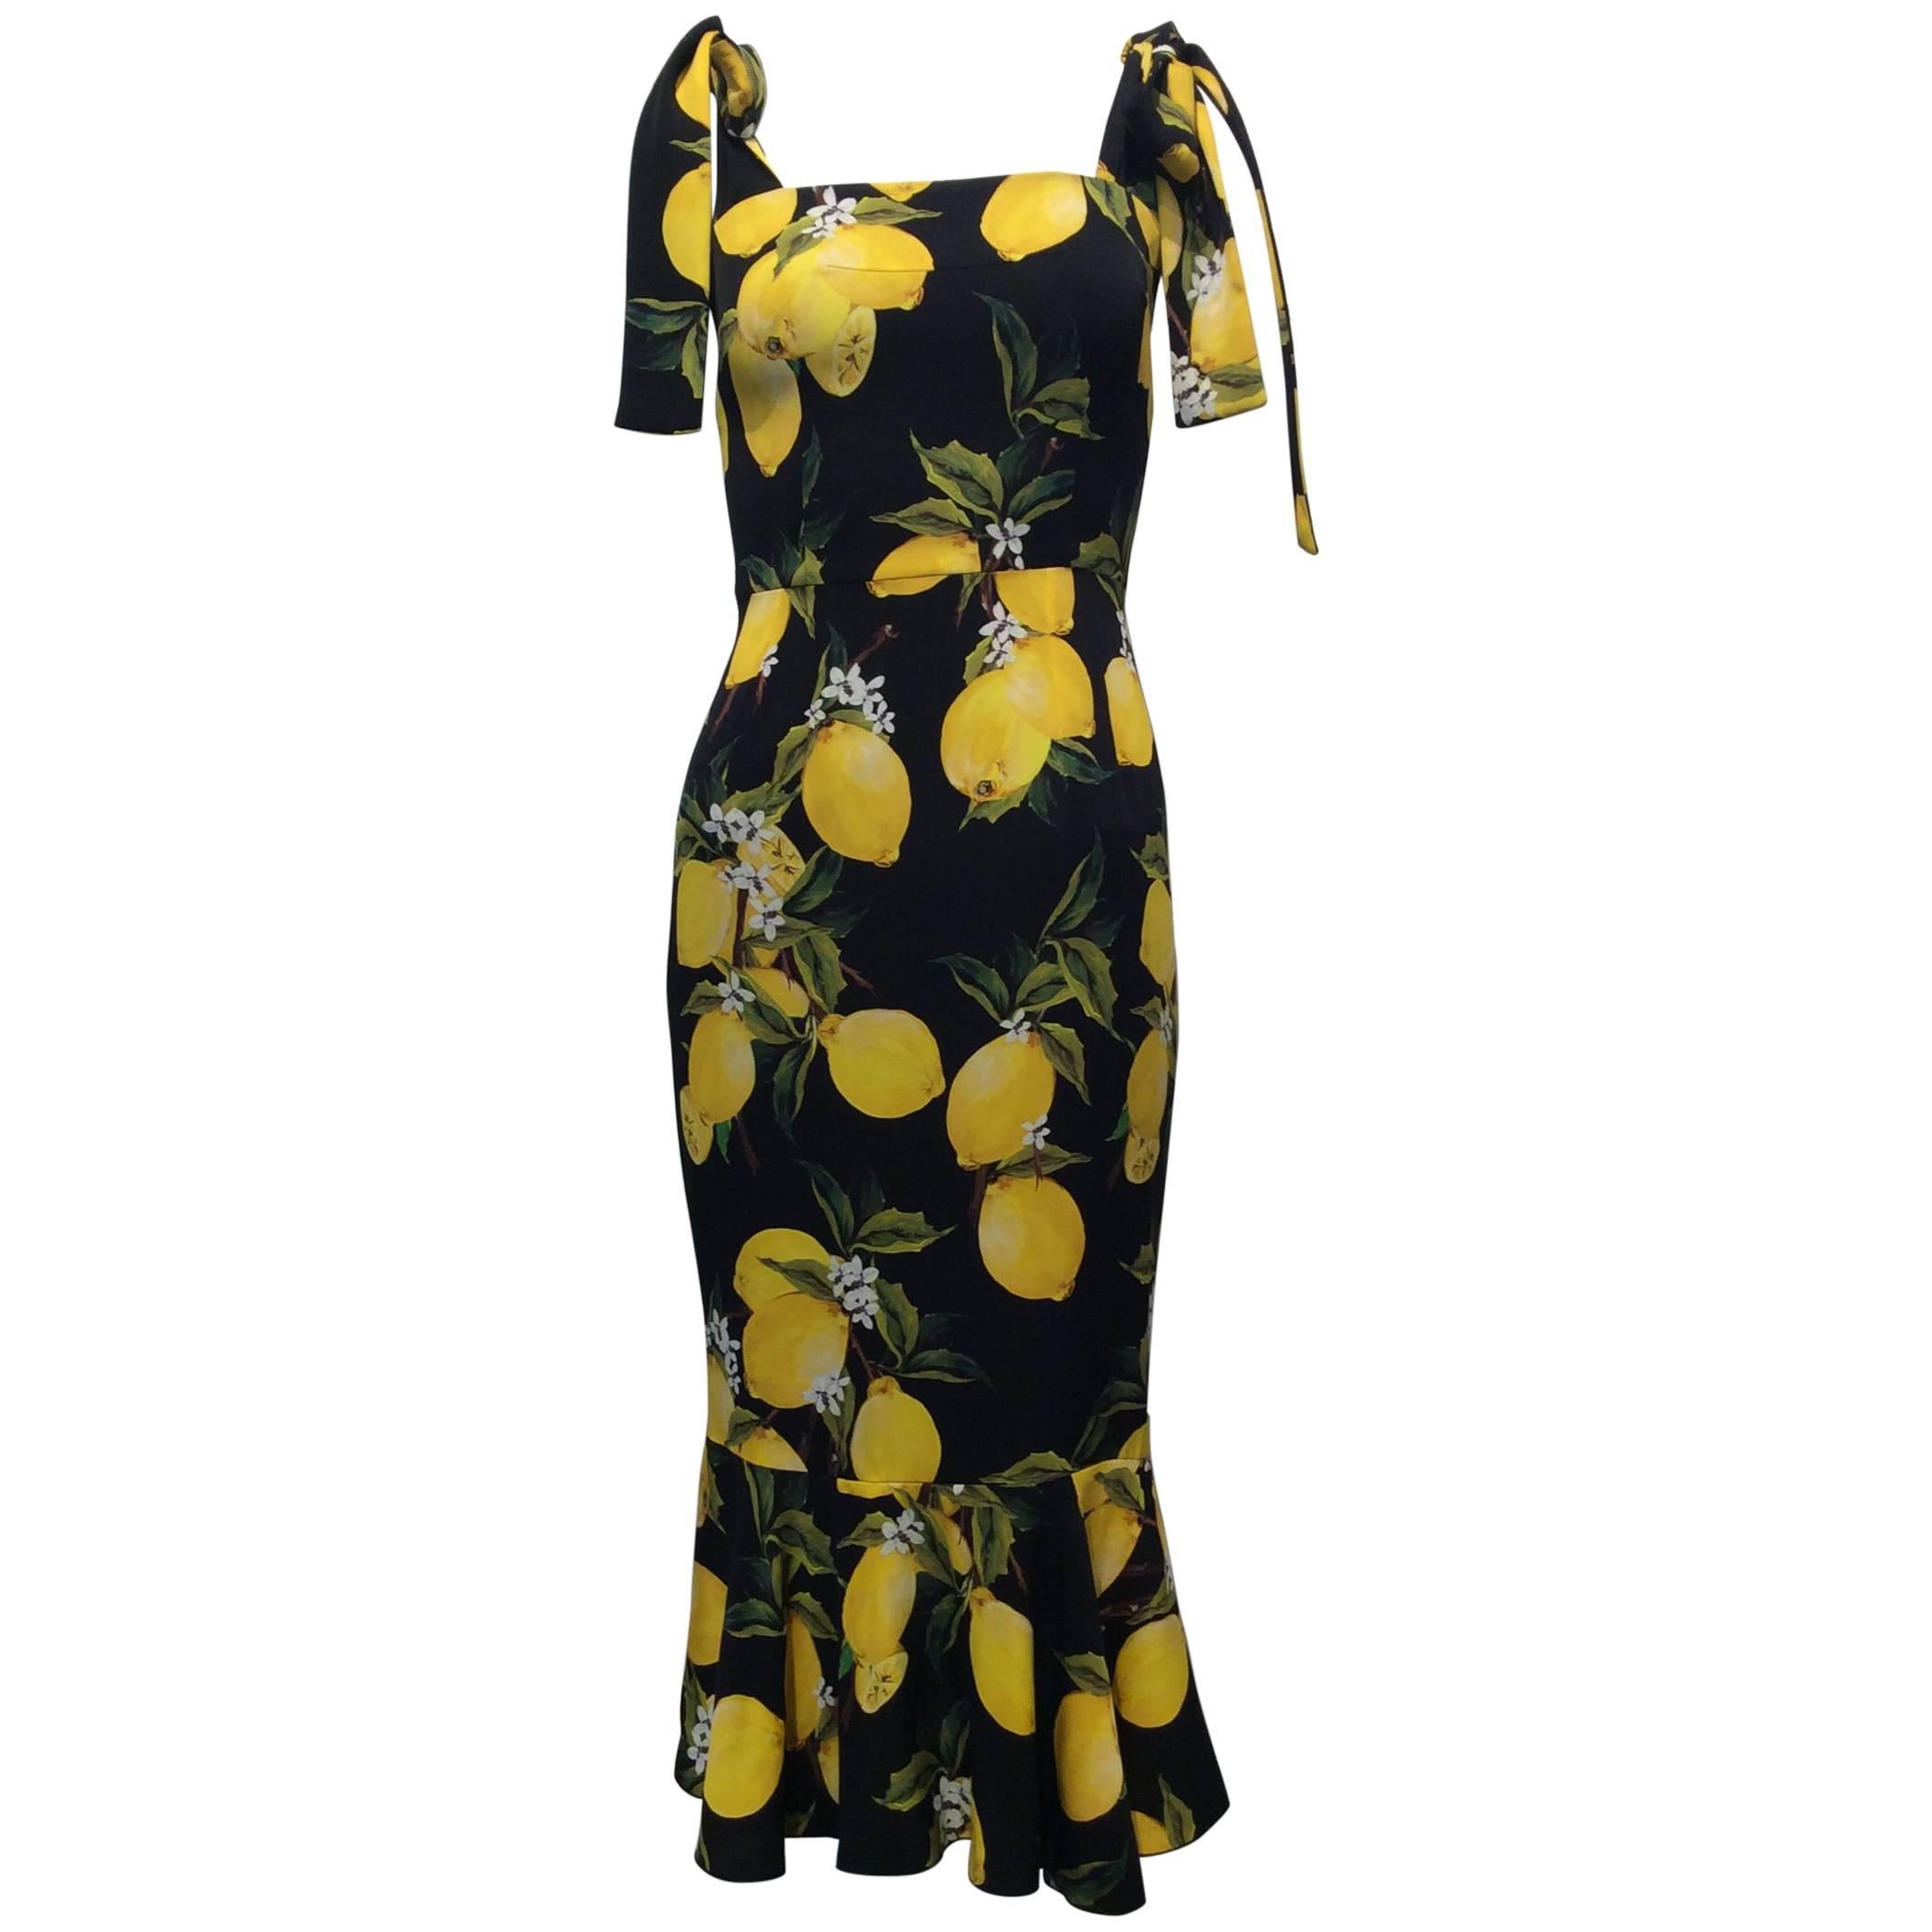 Dolce And Gabbana Lemon Print Dress Sz40 (Us 4)